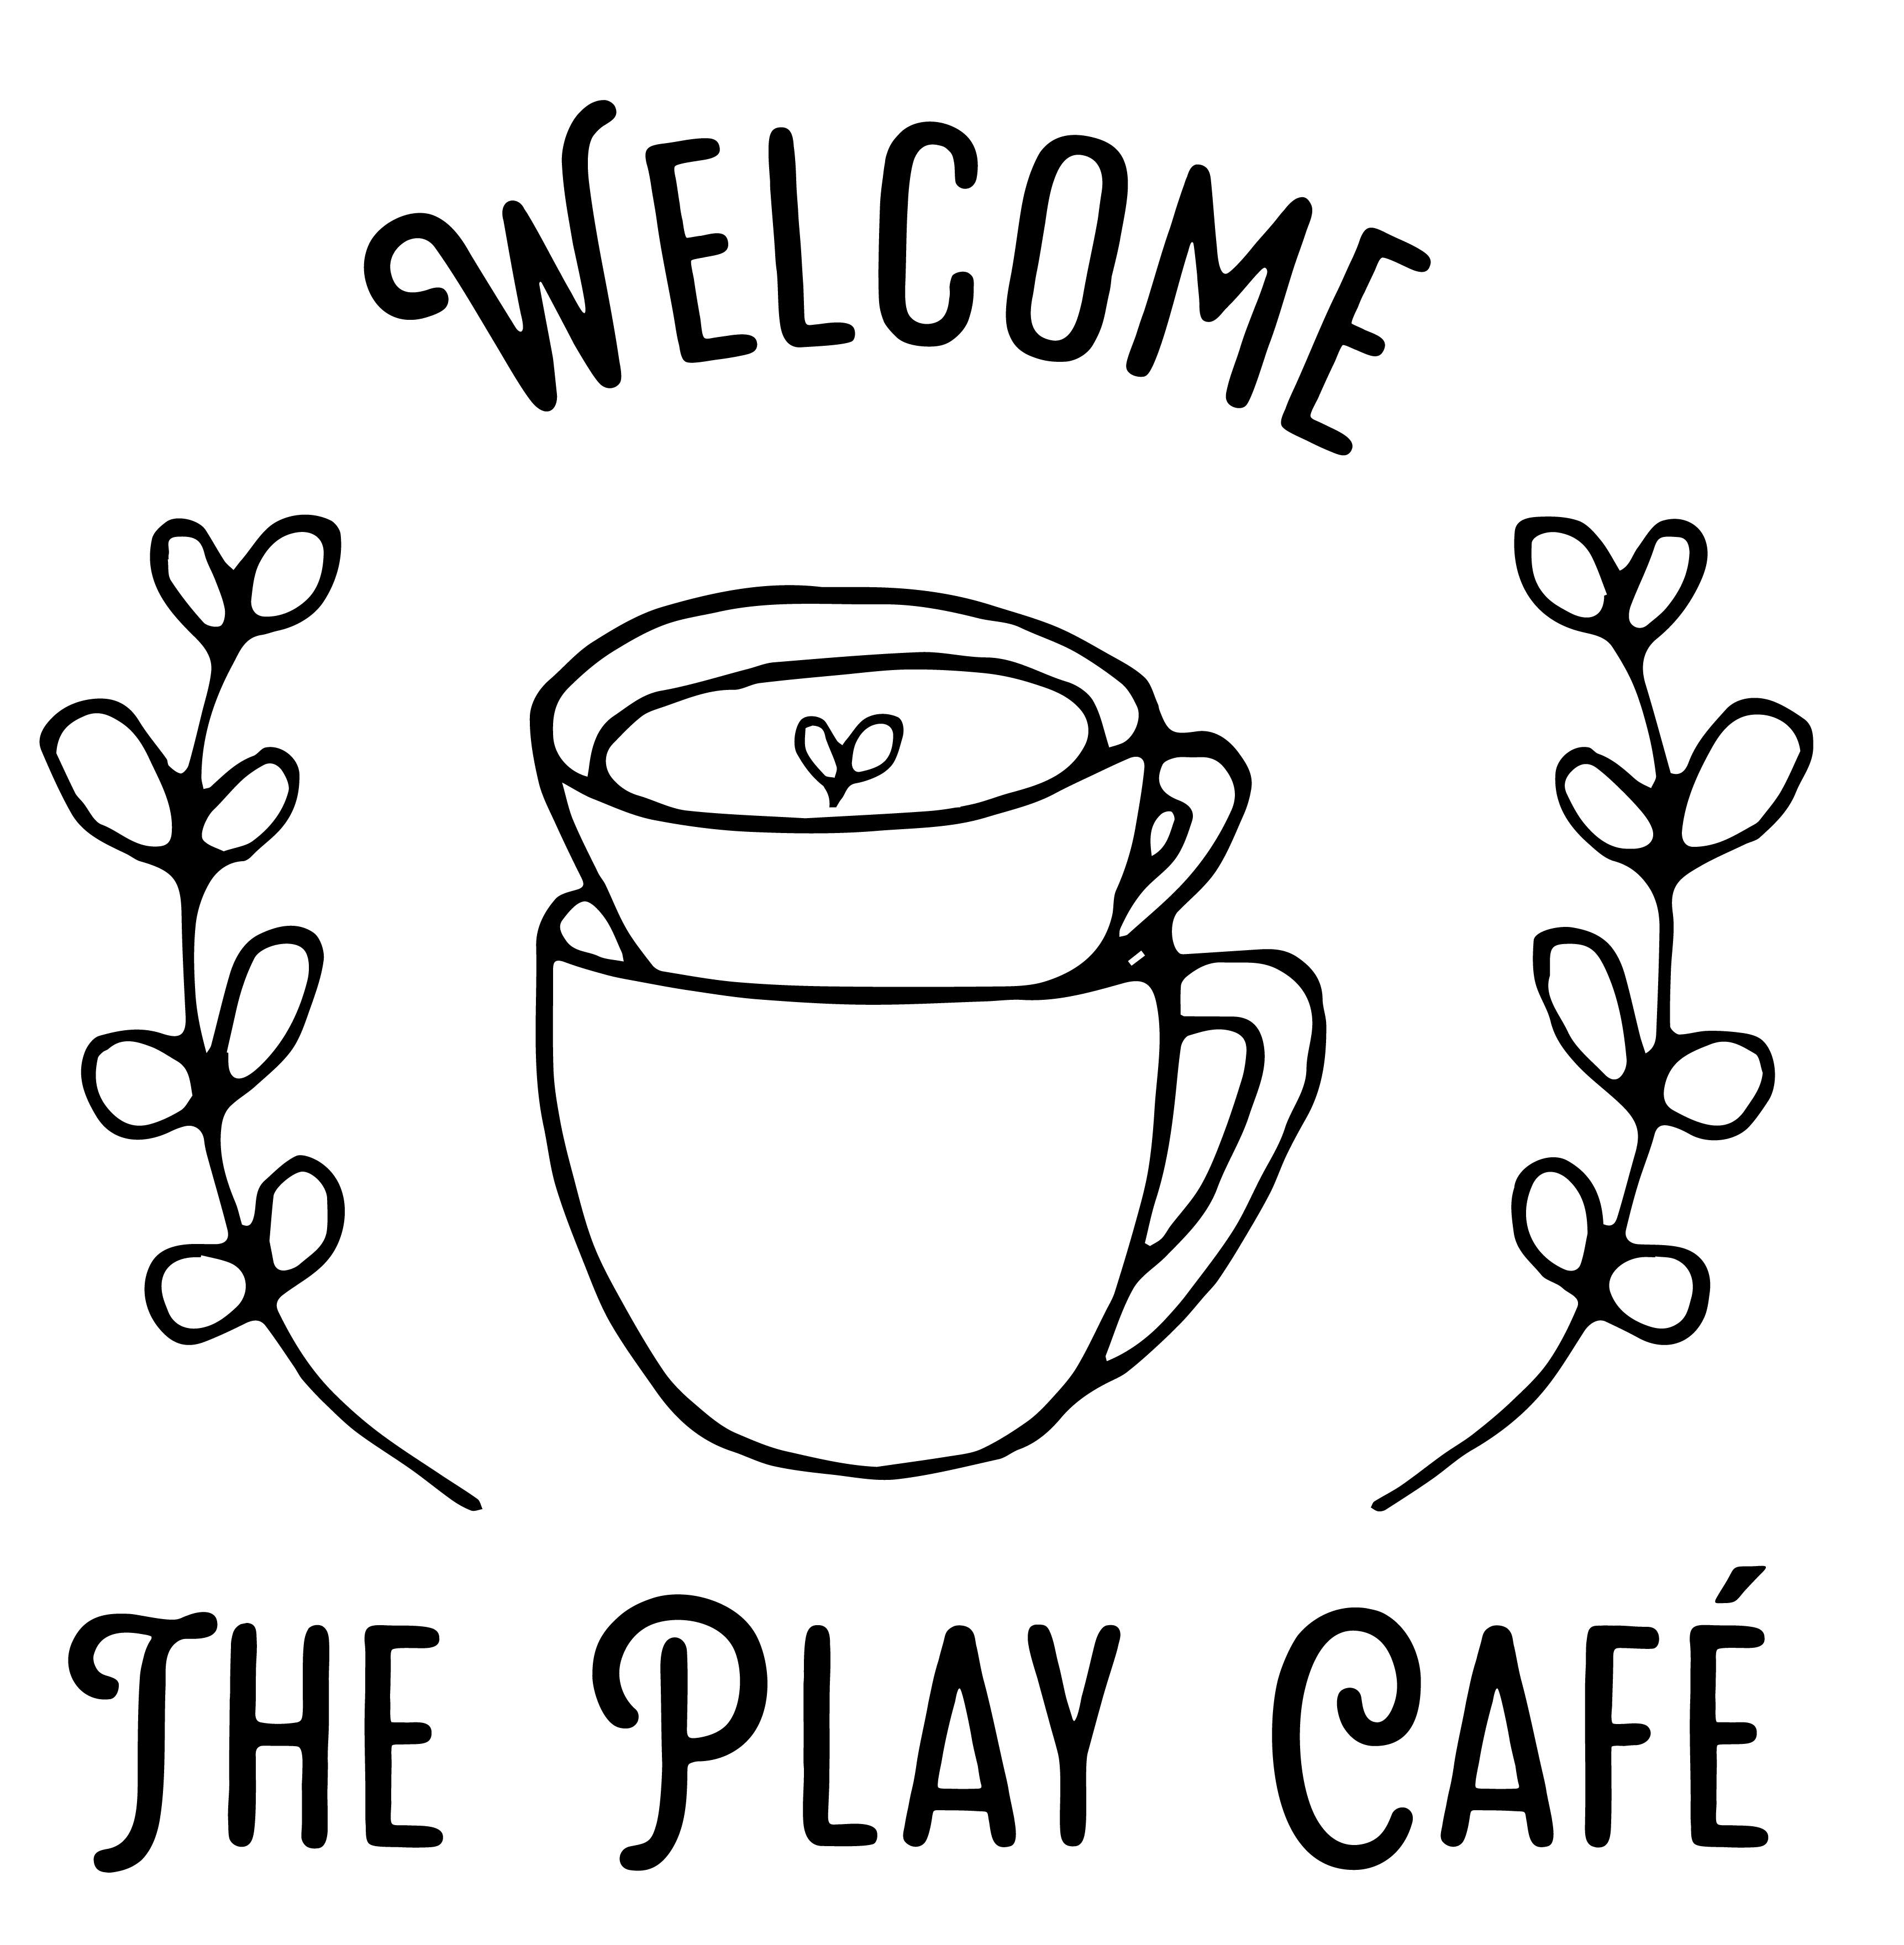 Play cafe logo